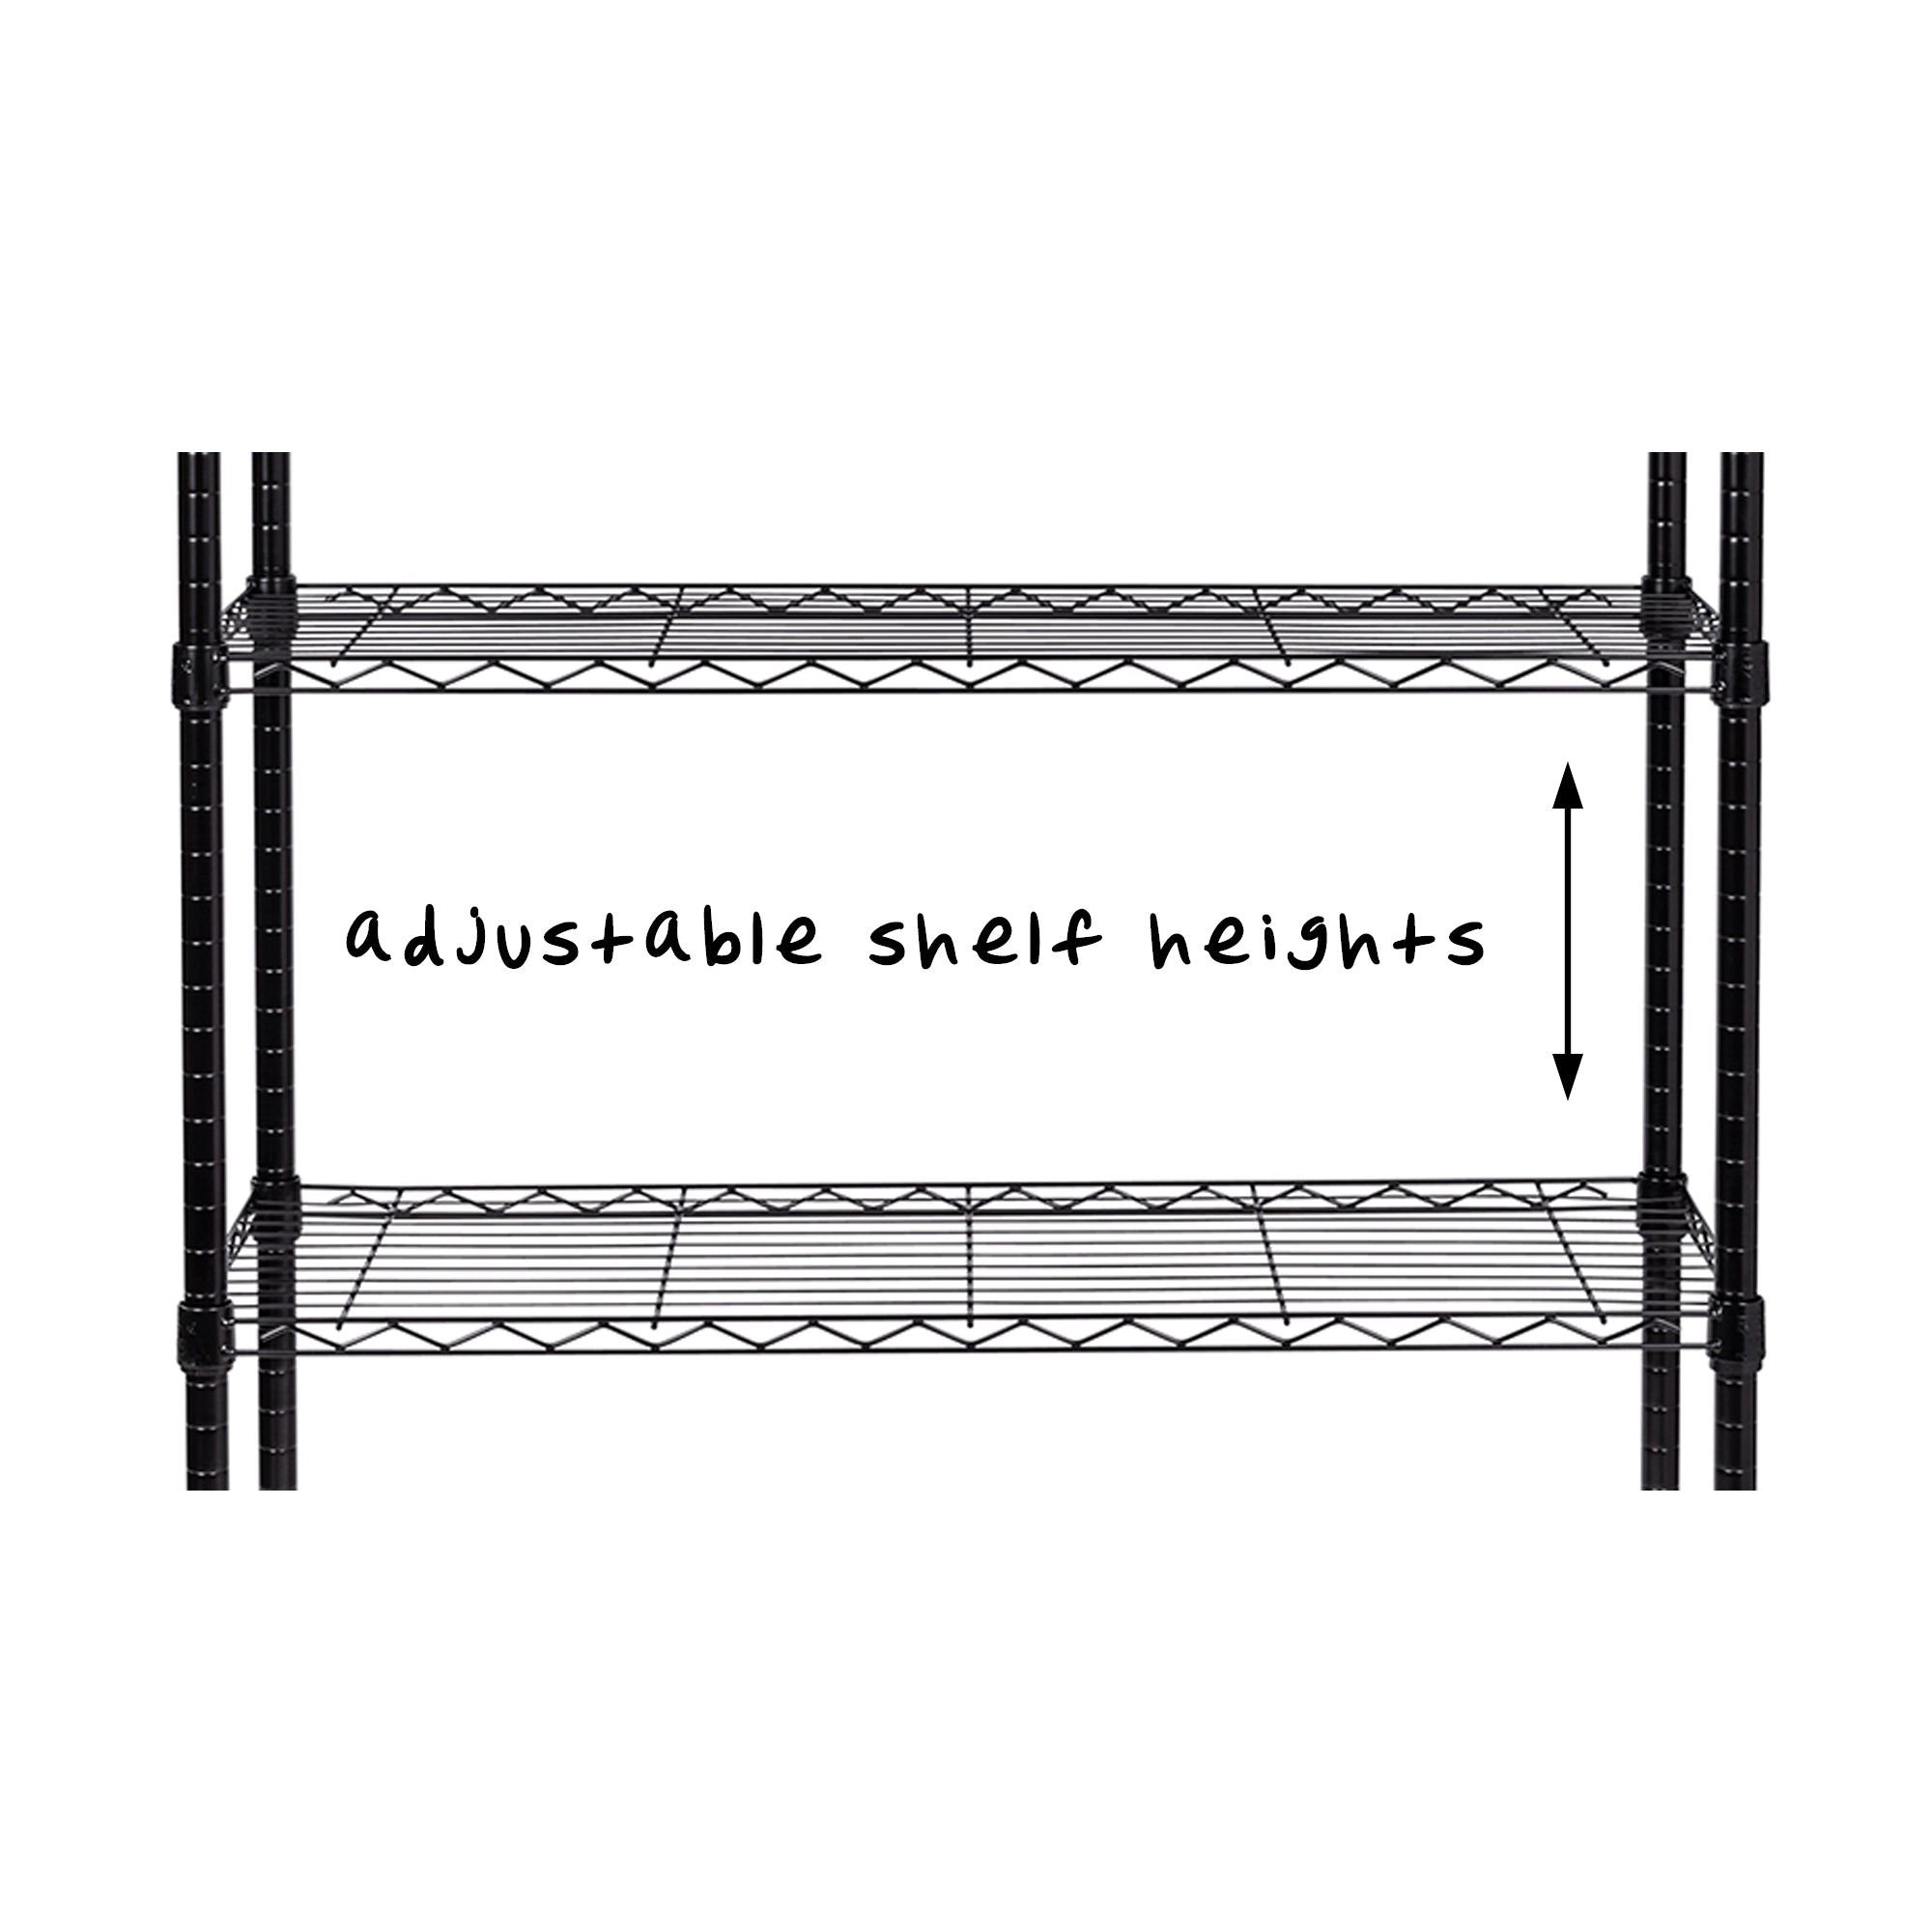 Black 5-Tier Adjustable Metal Shelving with 200-lb Shelf Capacity